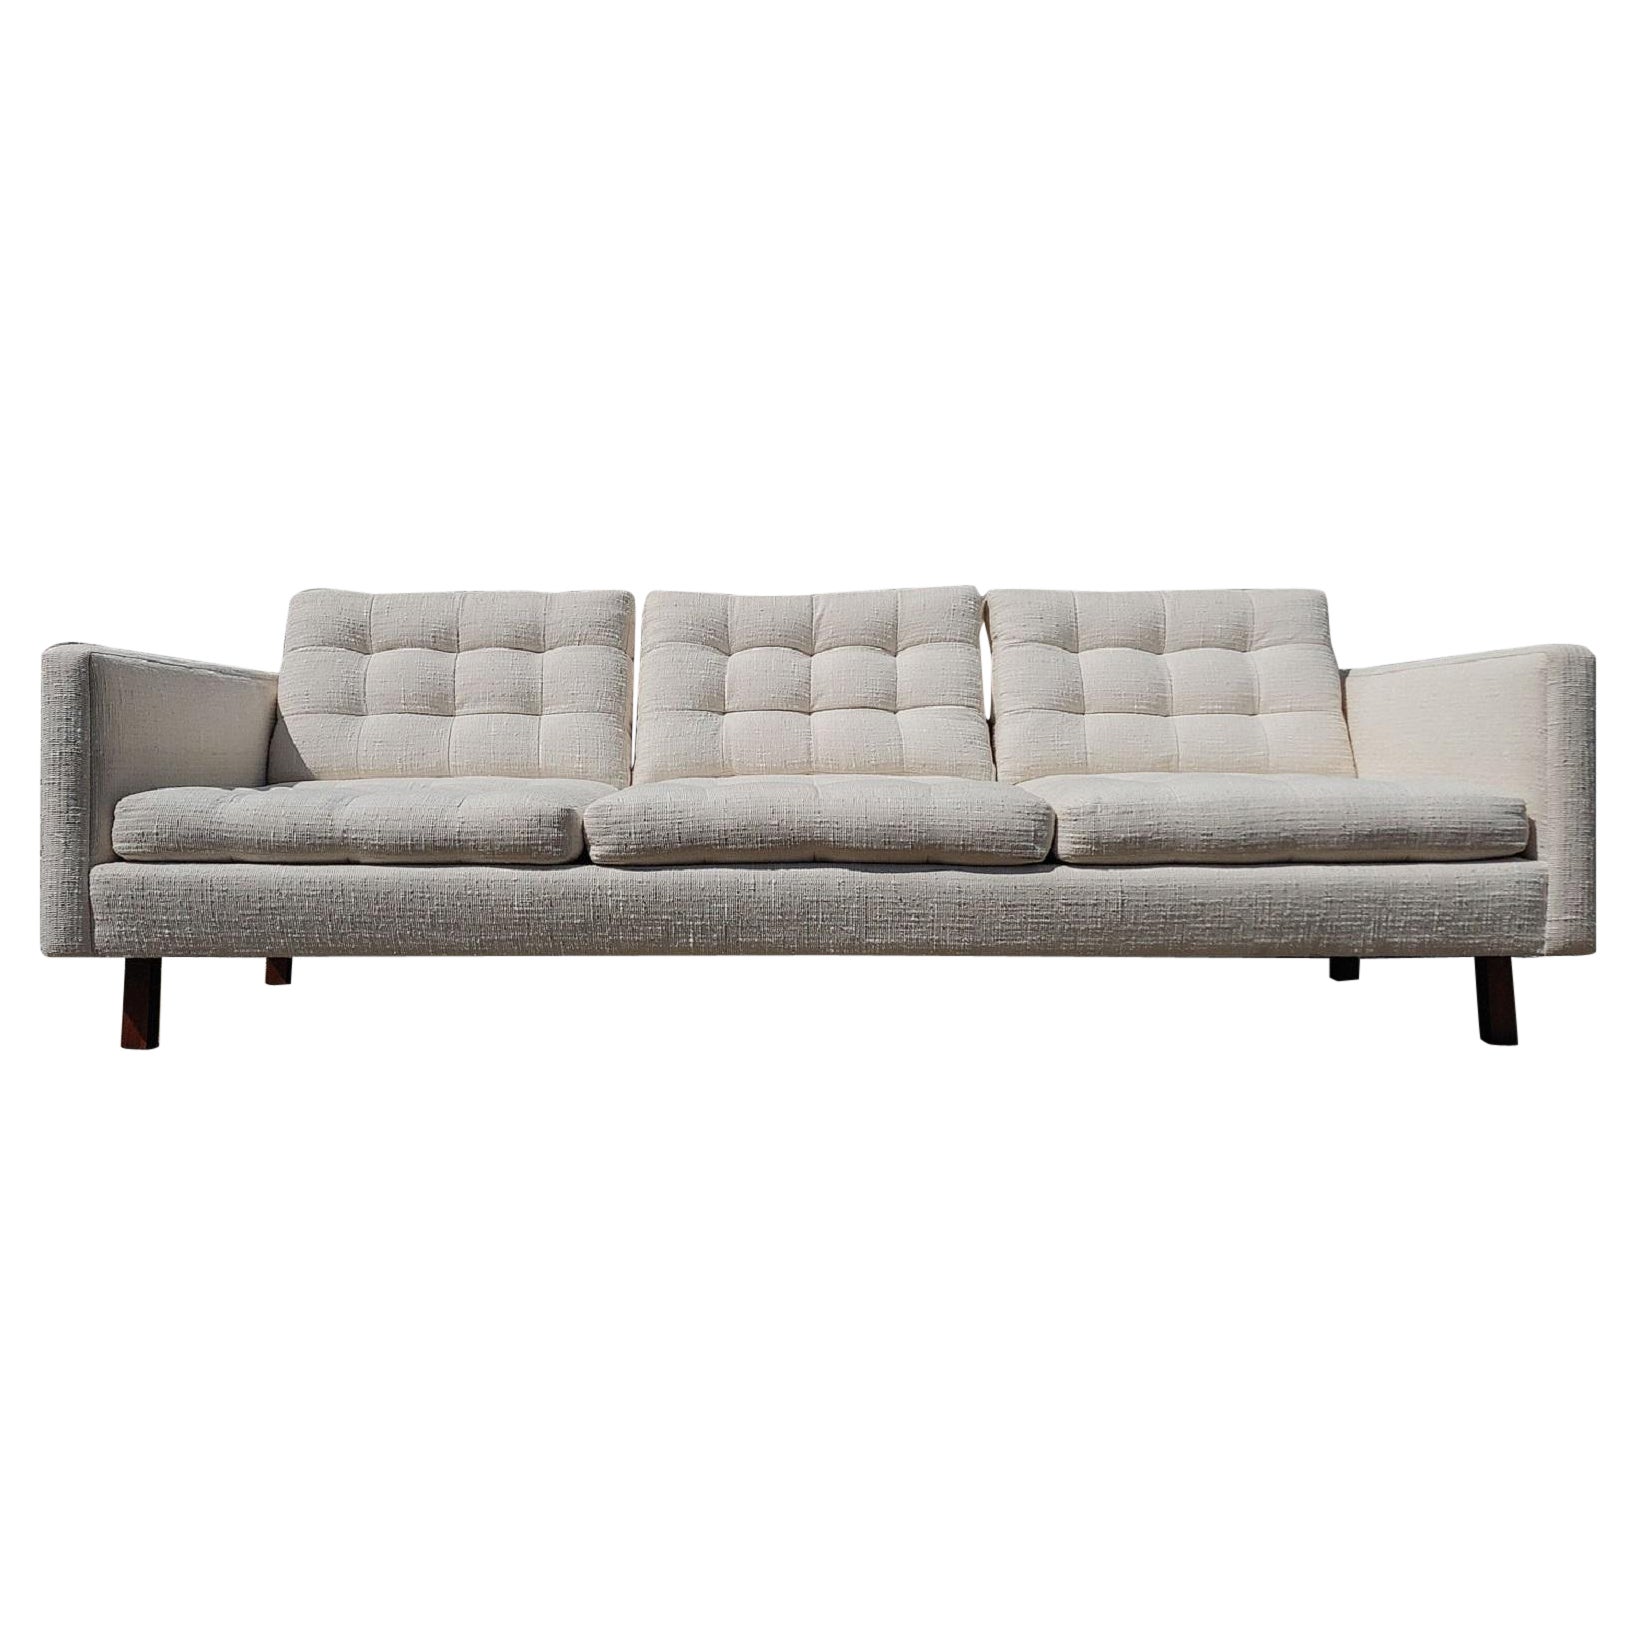 Mid Century Danish Modern Tufted Sofa For Sale